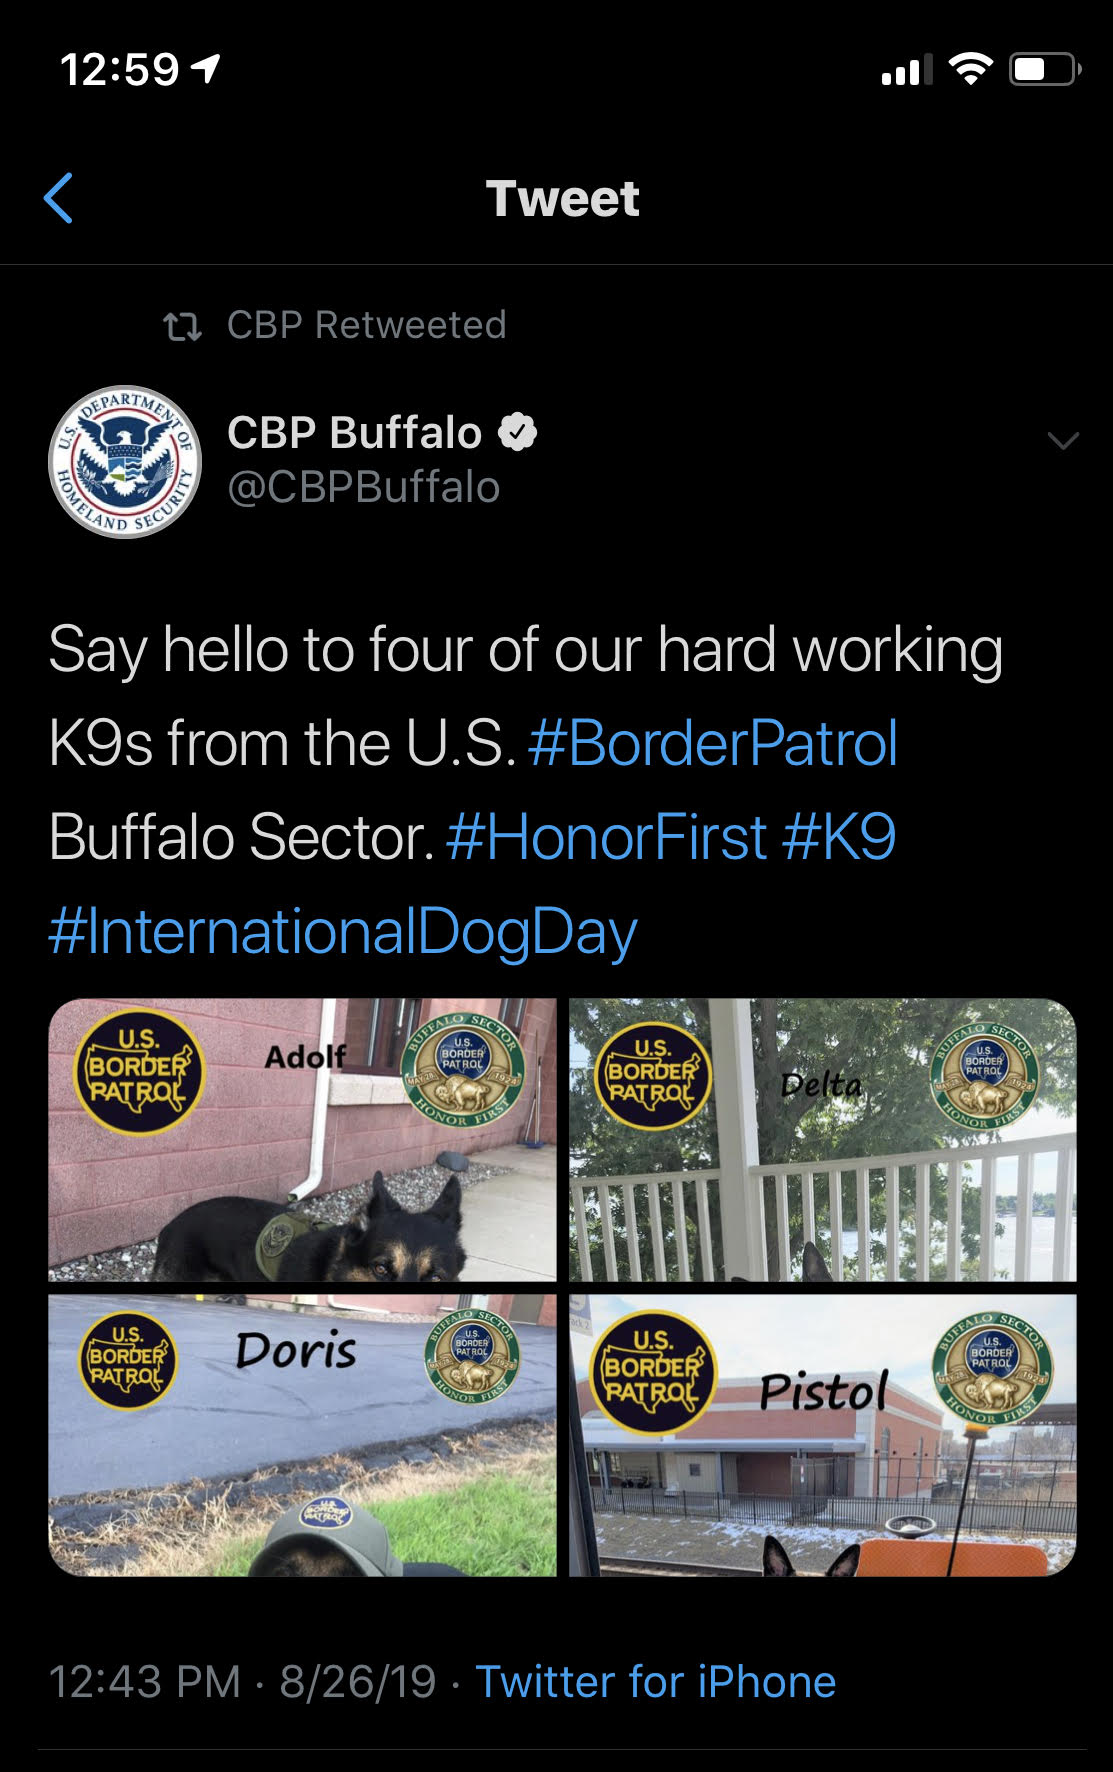 A now-deleted tweet shows Customs and Border Patrol celebrating a CBP drug dog named Adolf